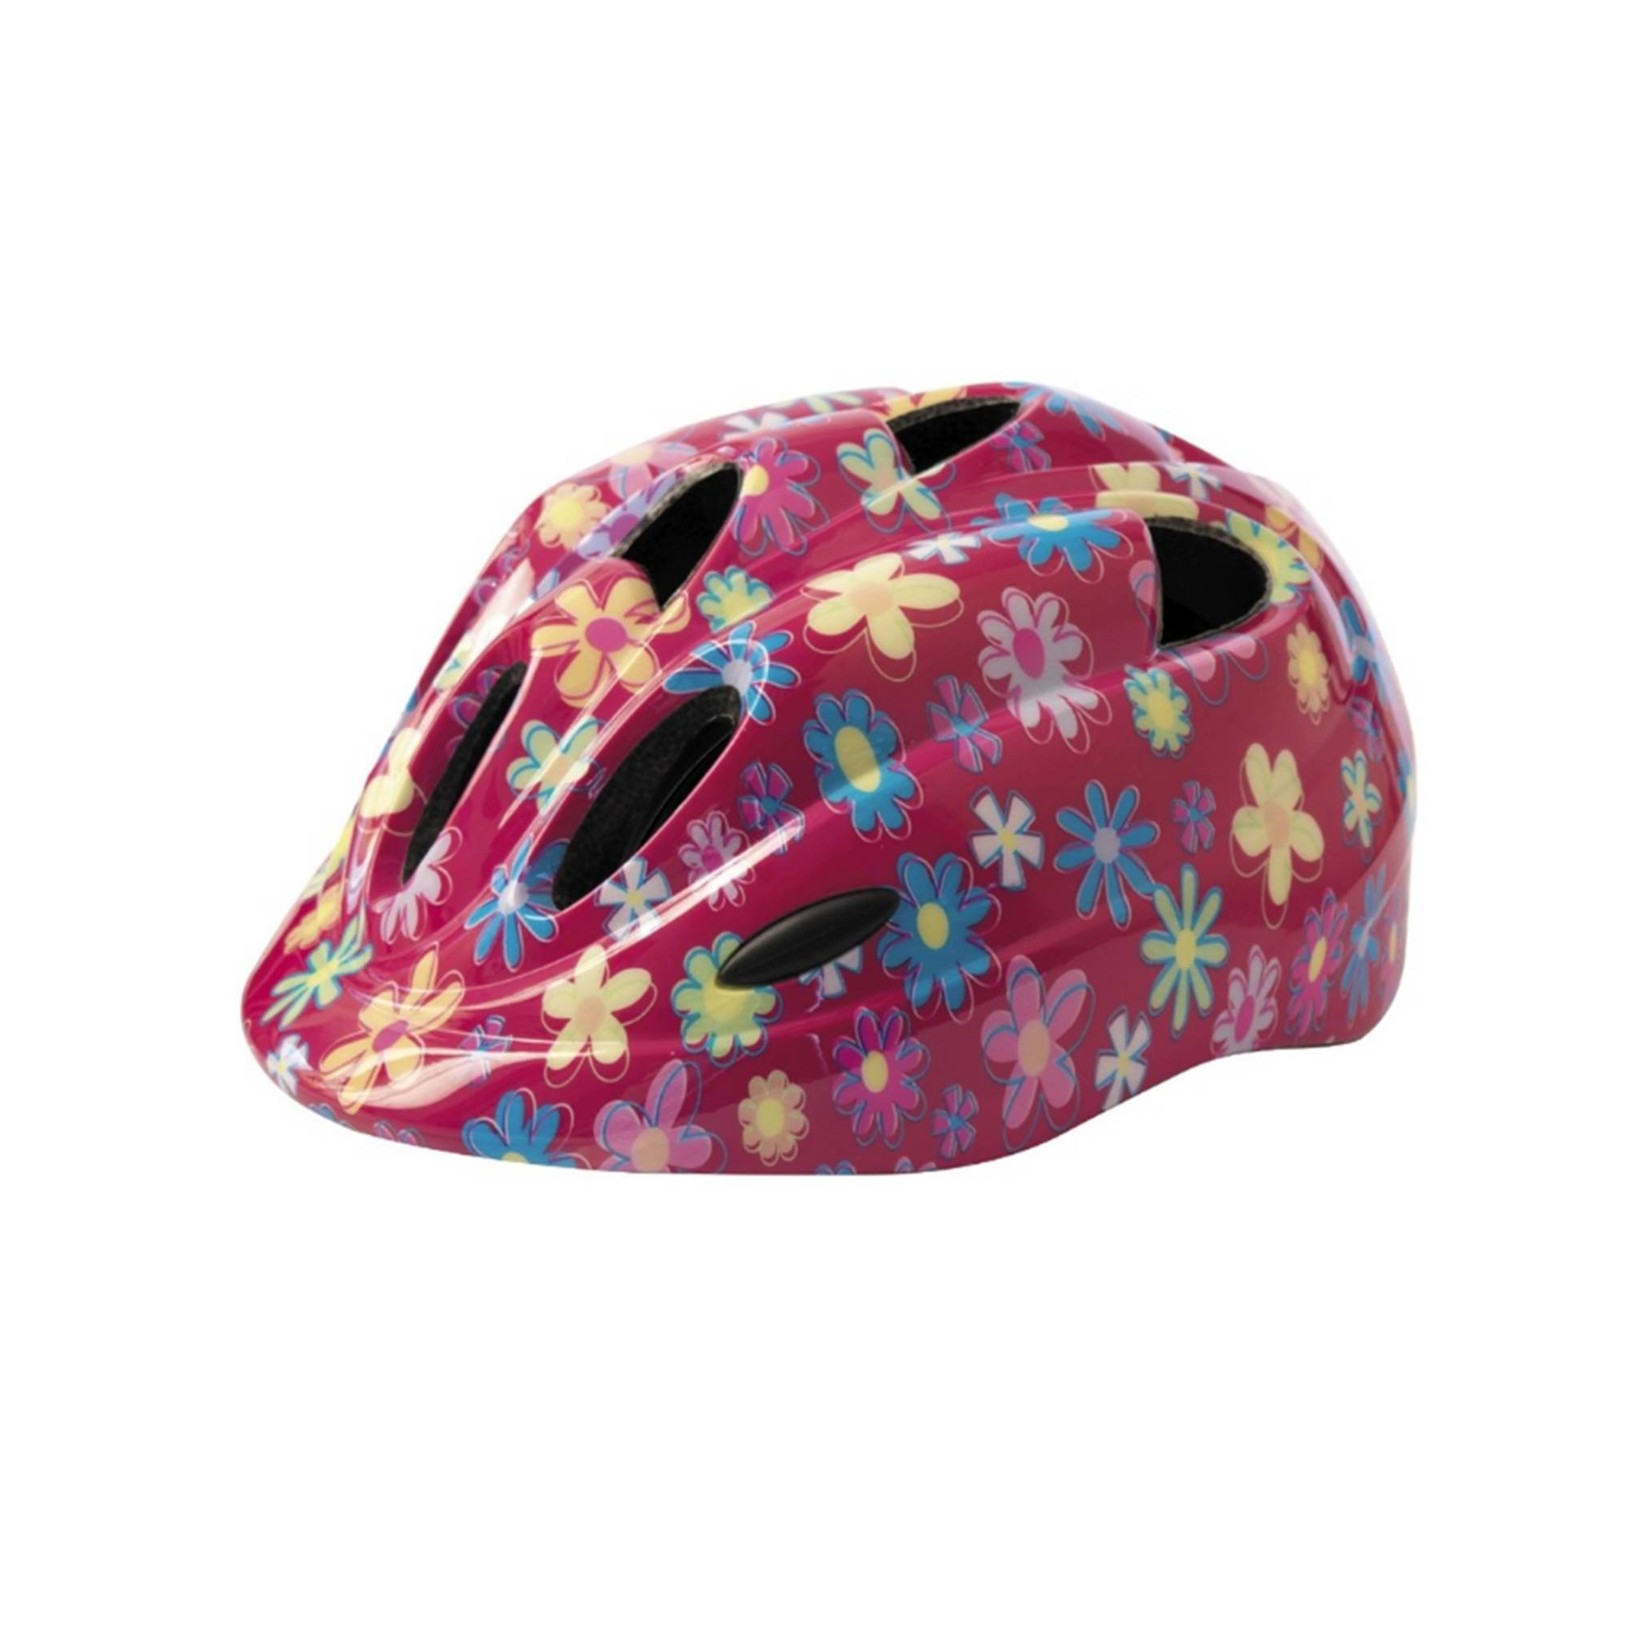 Azur Flowers Kids Helmet